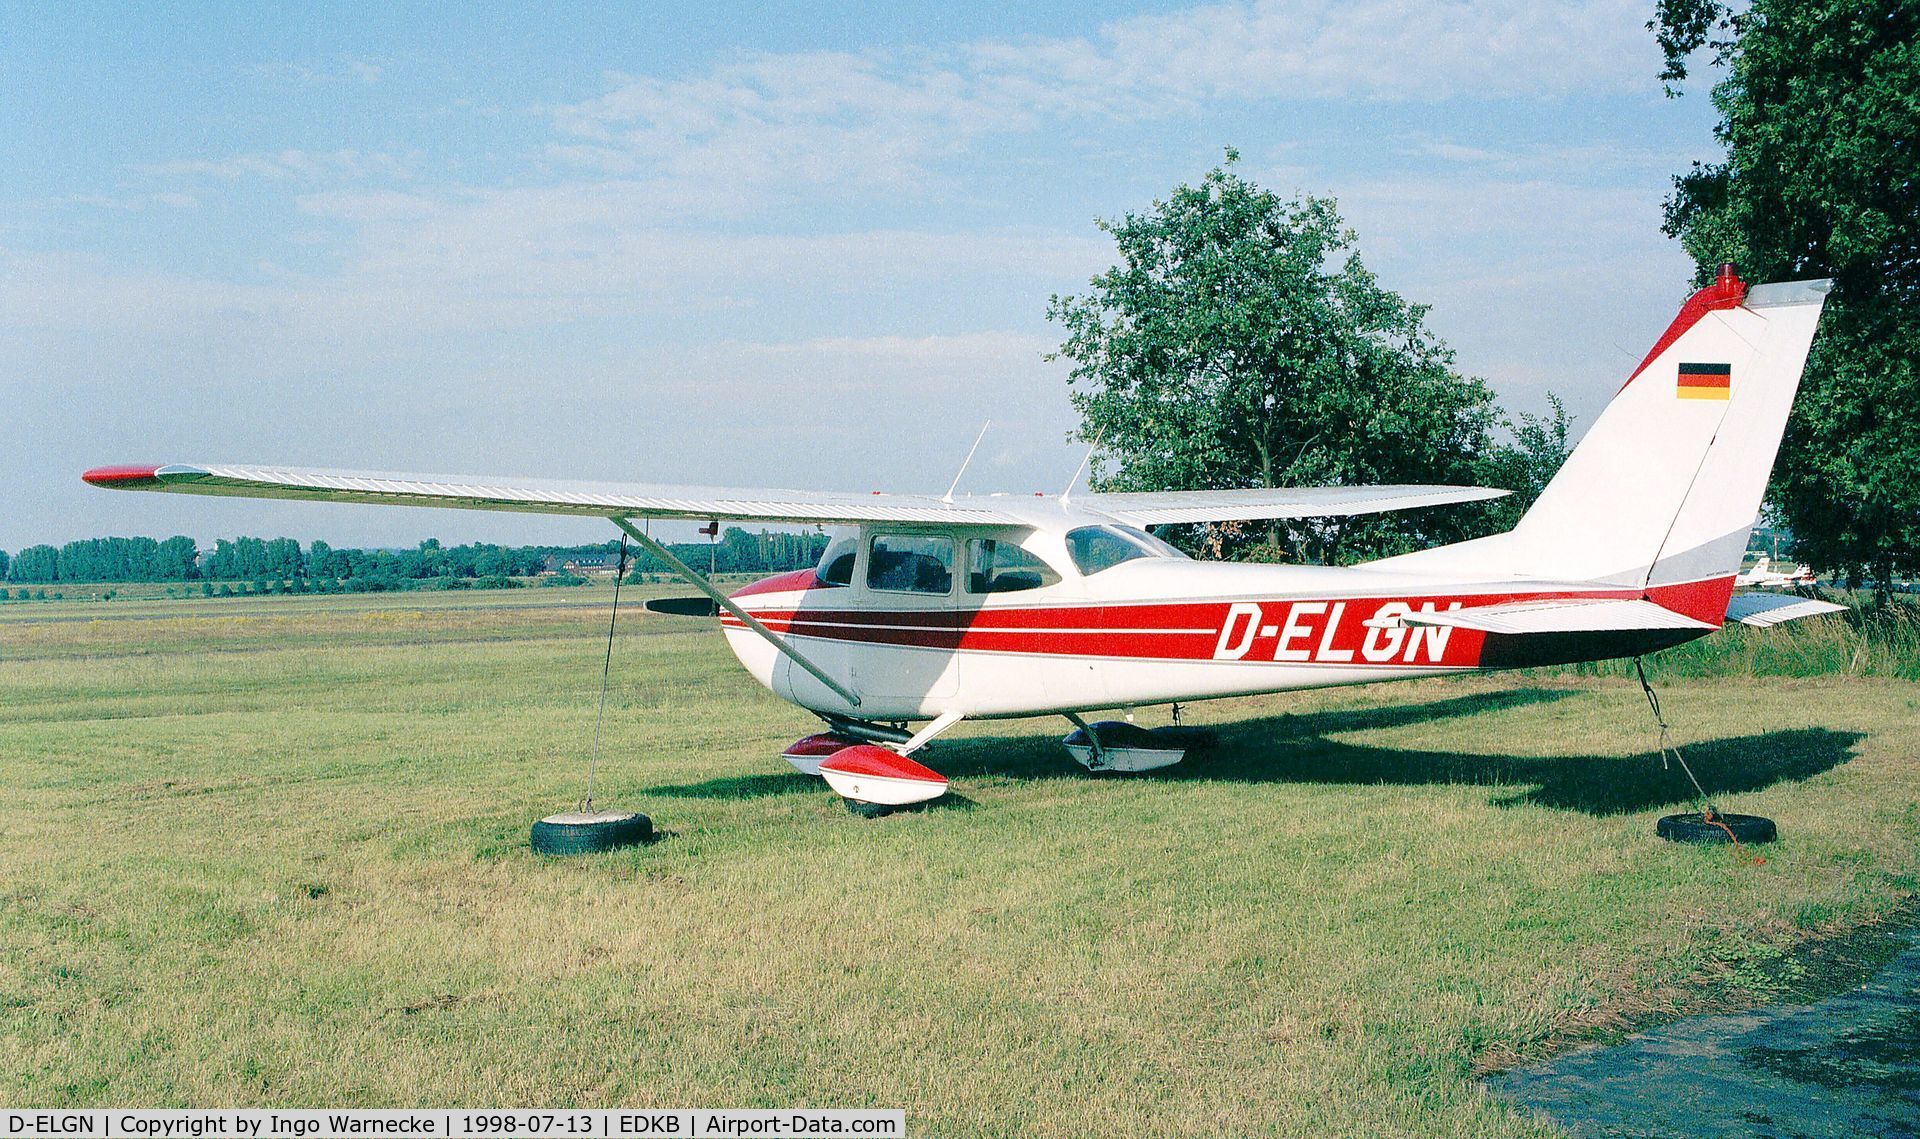 D-ELGN, 1964 Reims F172F Skyhawk C/N 0107, Cessna (Reims) F172F Skyhawk at Bonn-Hangelar airfield